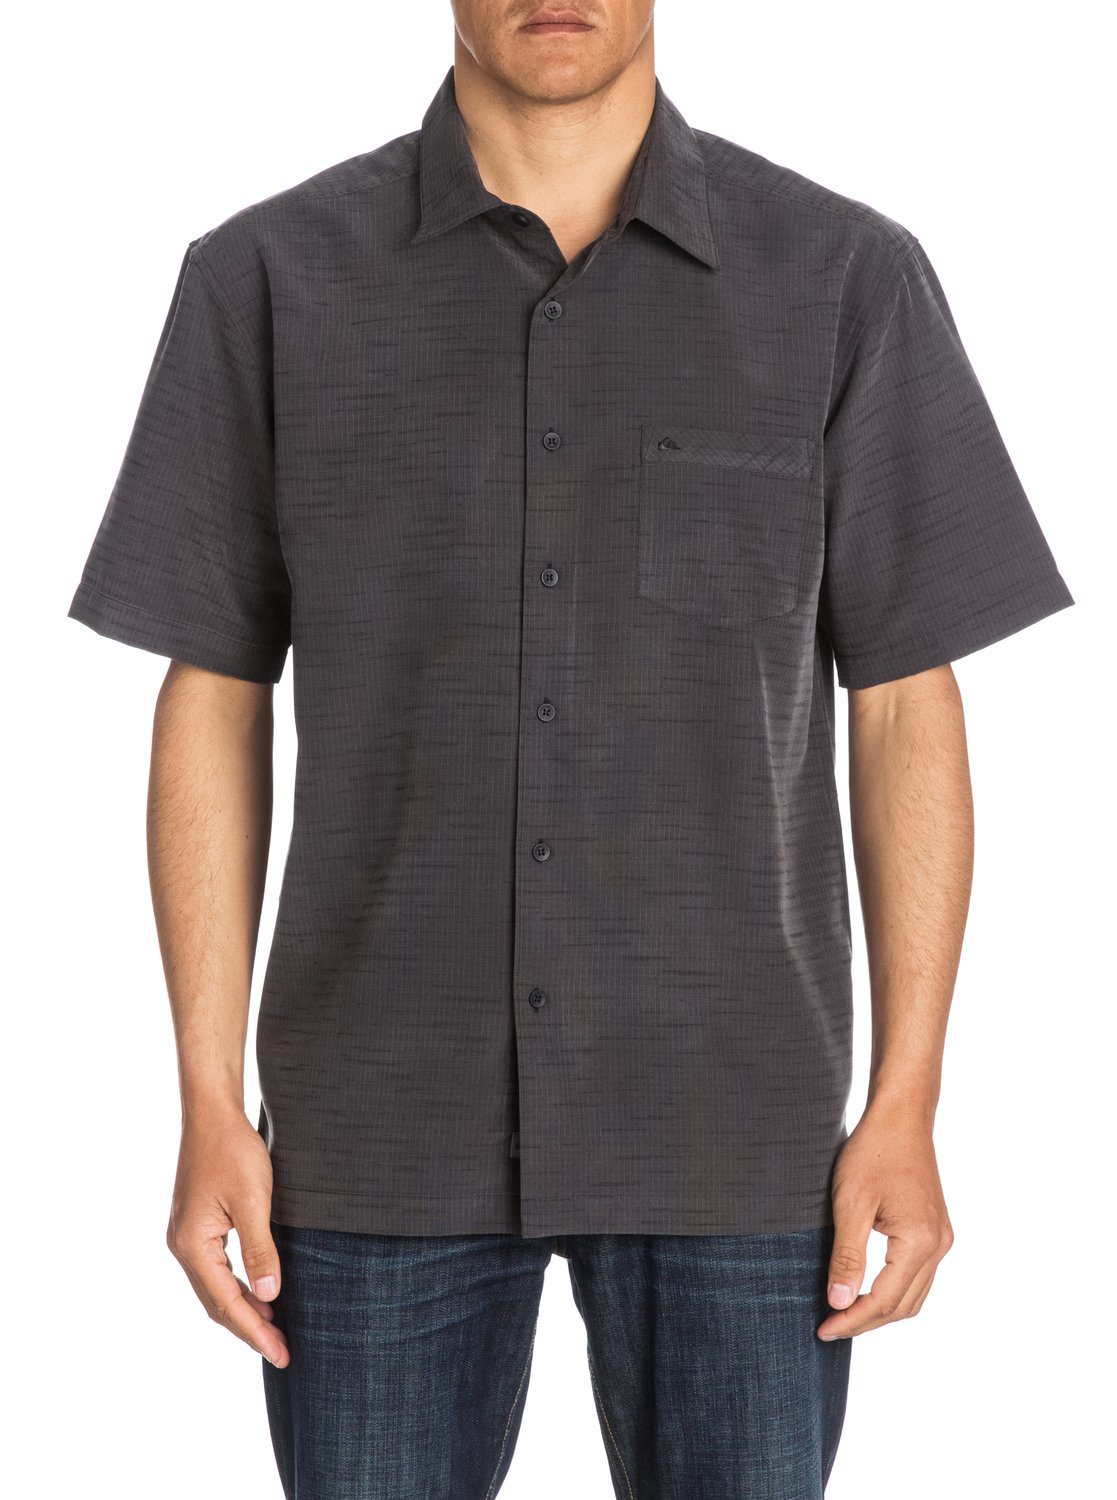 Quiksilver™ Waterman Centinela Short Sleeve Shirt AQMWT03106 | eBay